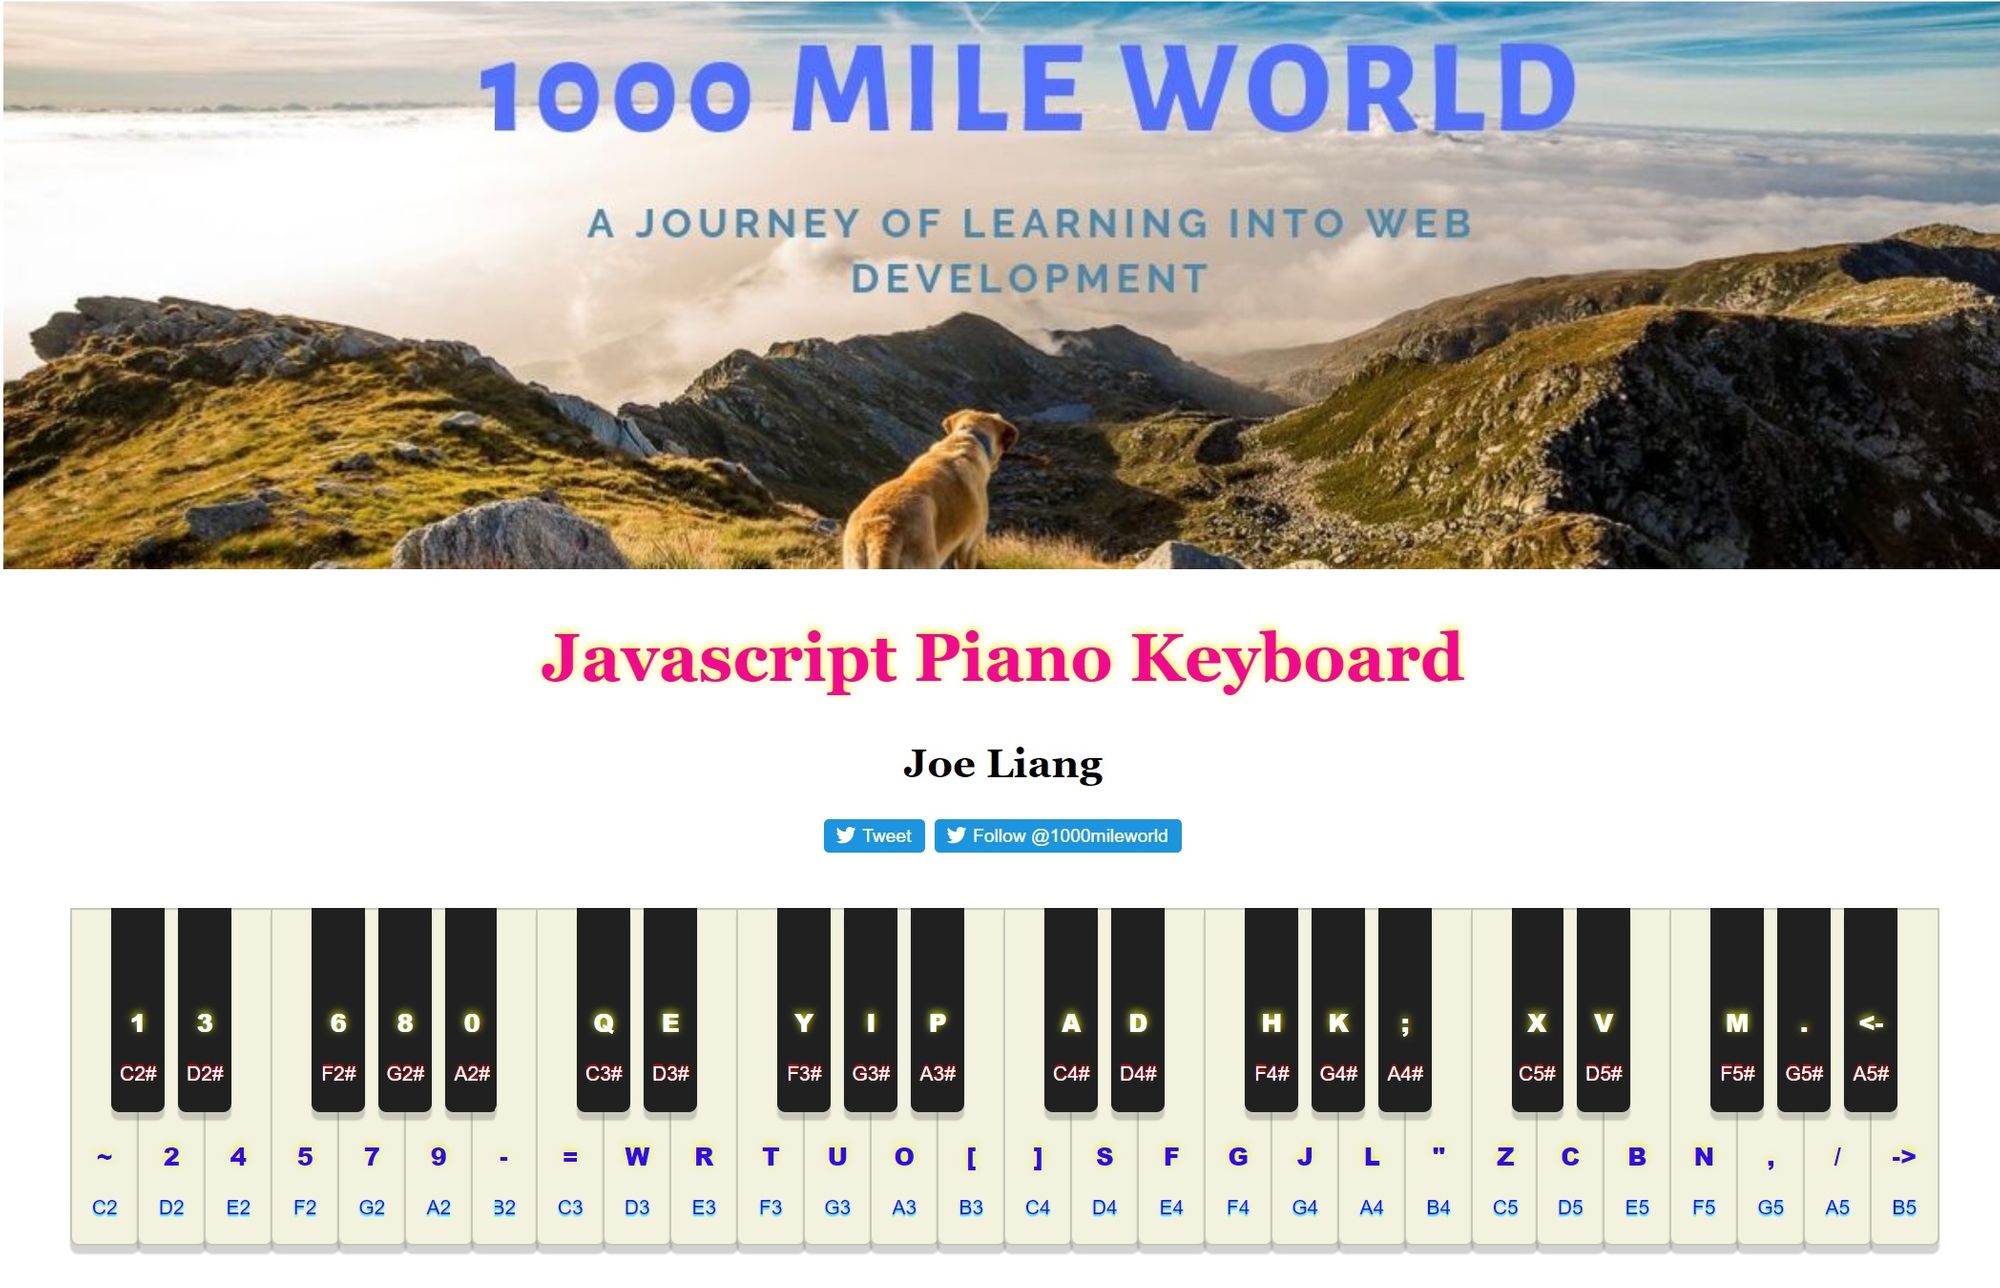 Online piano, play virtual midi piano keyboard player for free